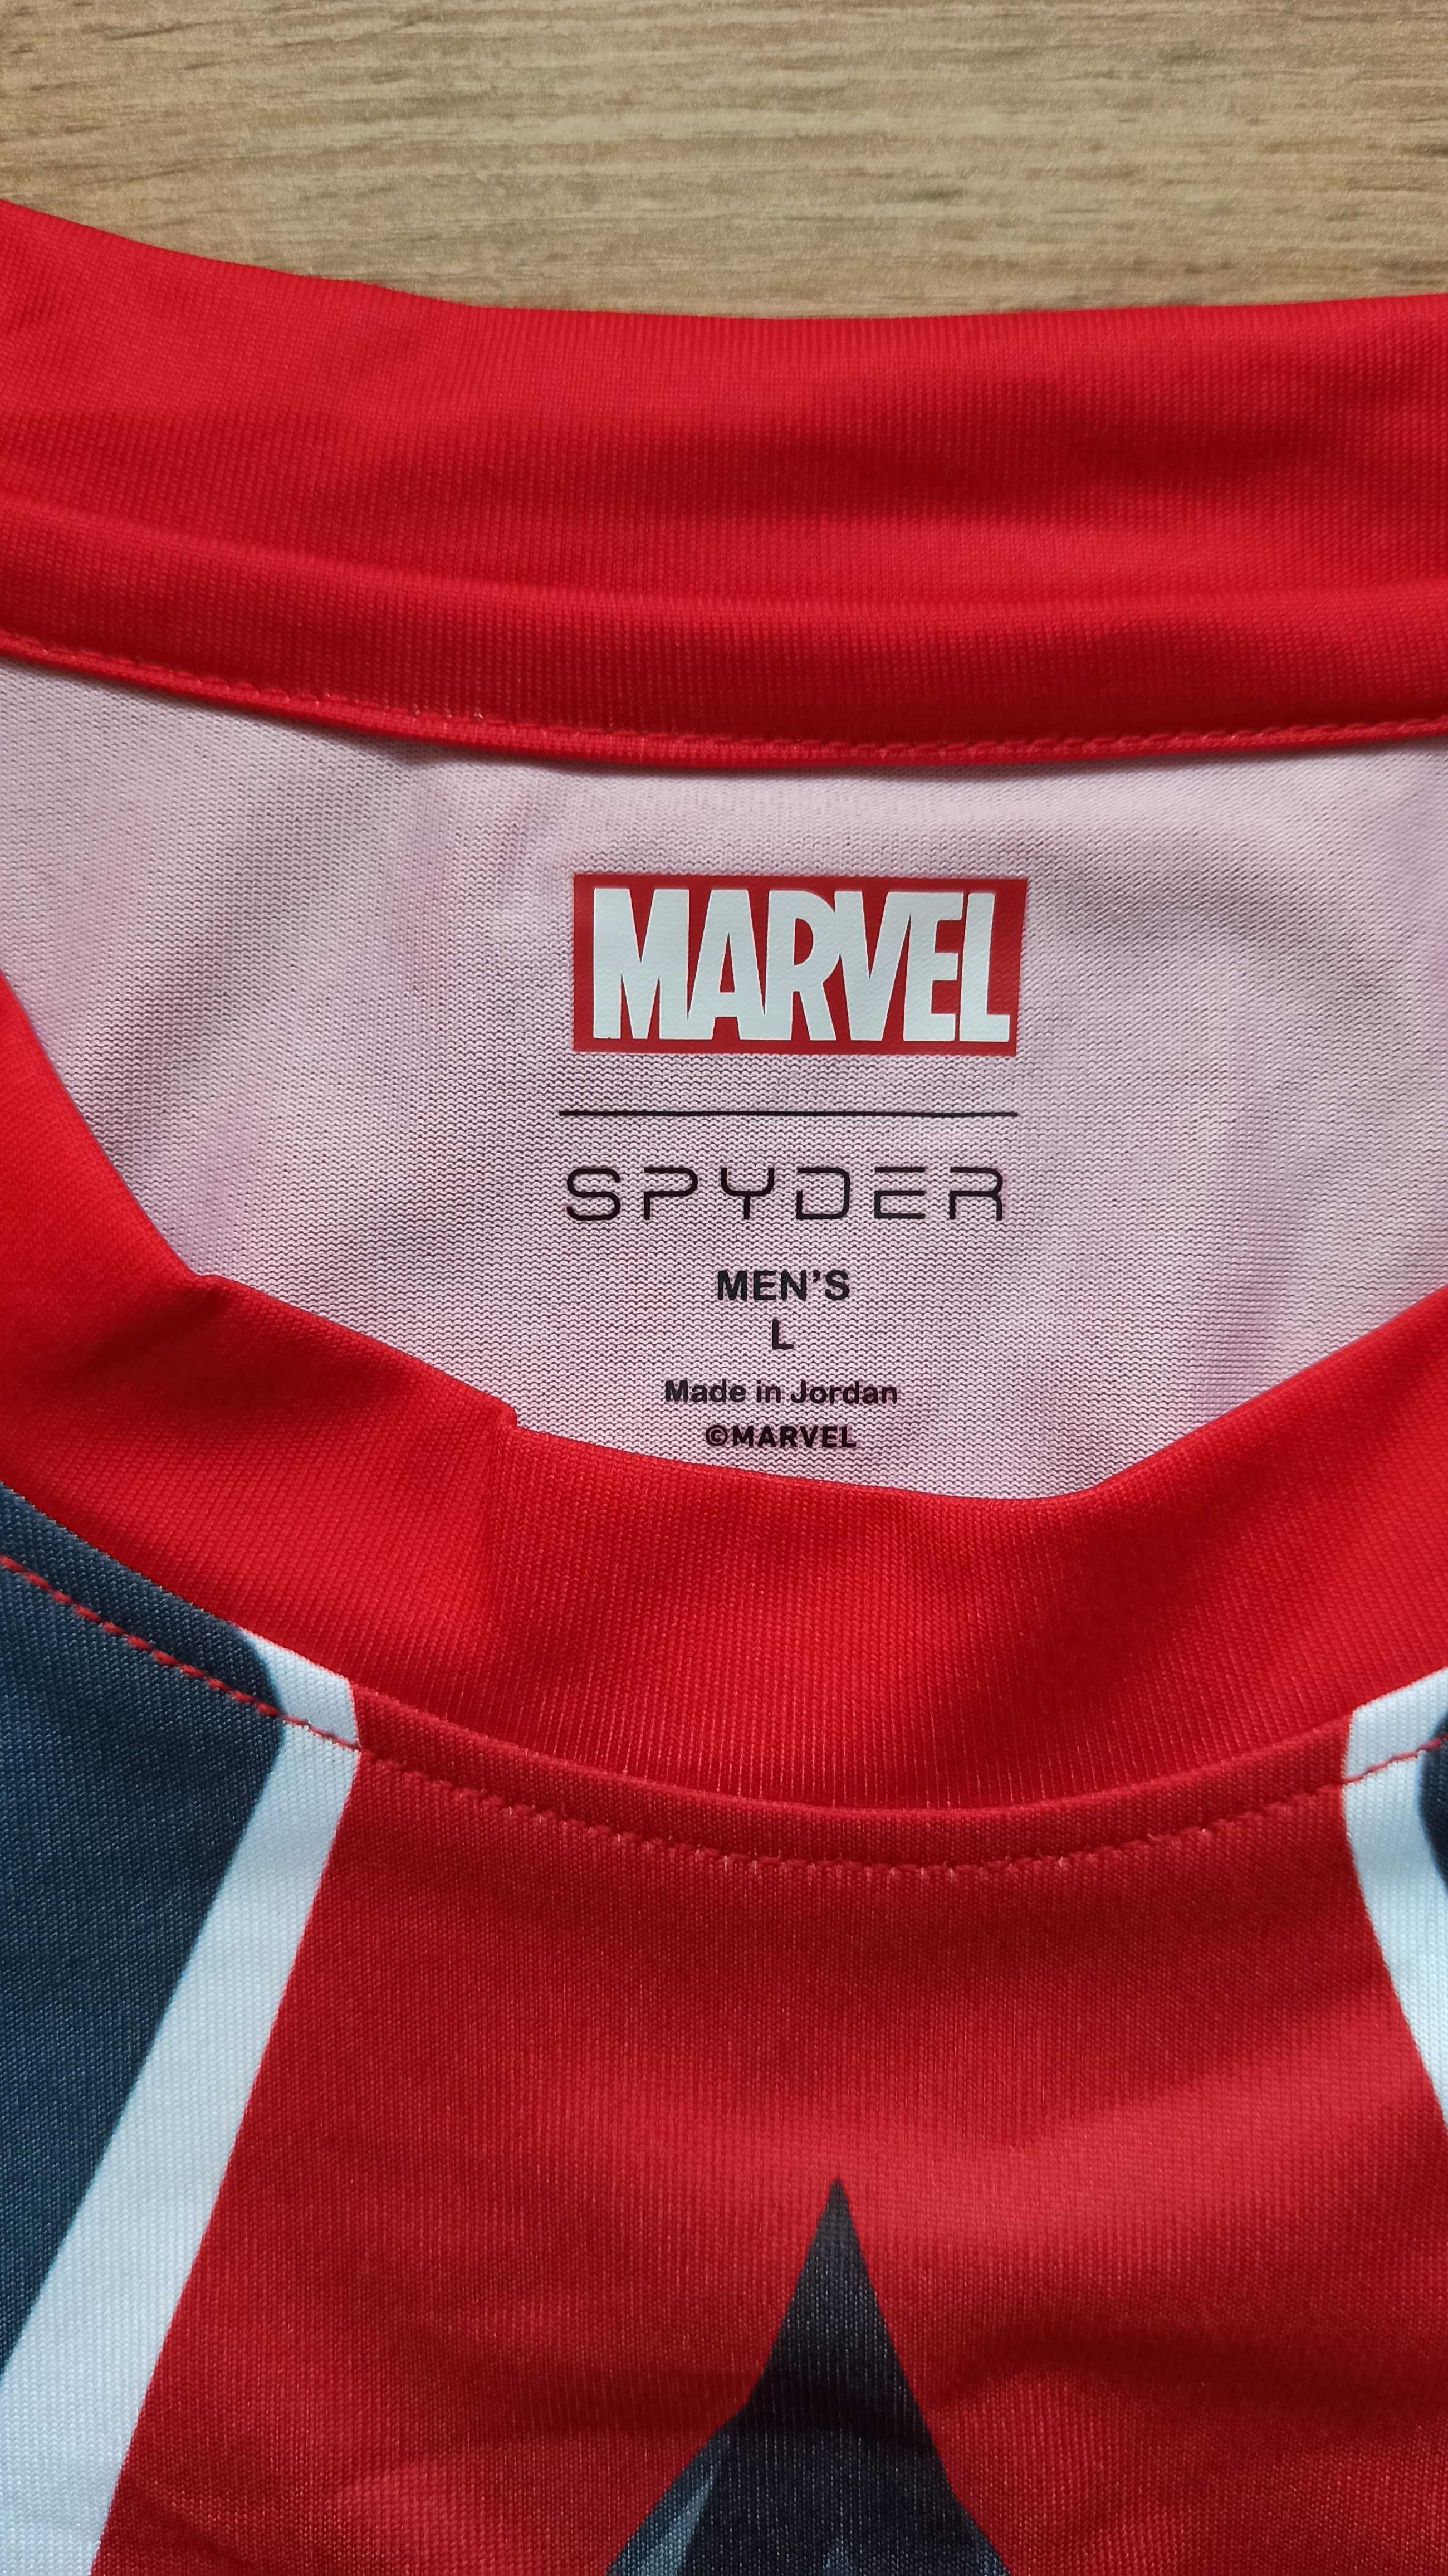 джерсі Spyder, Marvel (Капітан Америка)